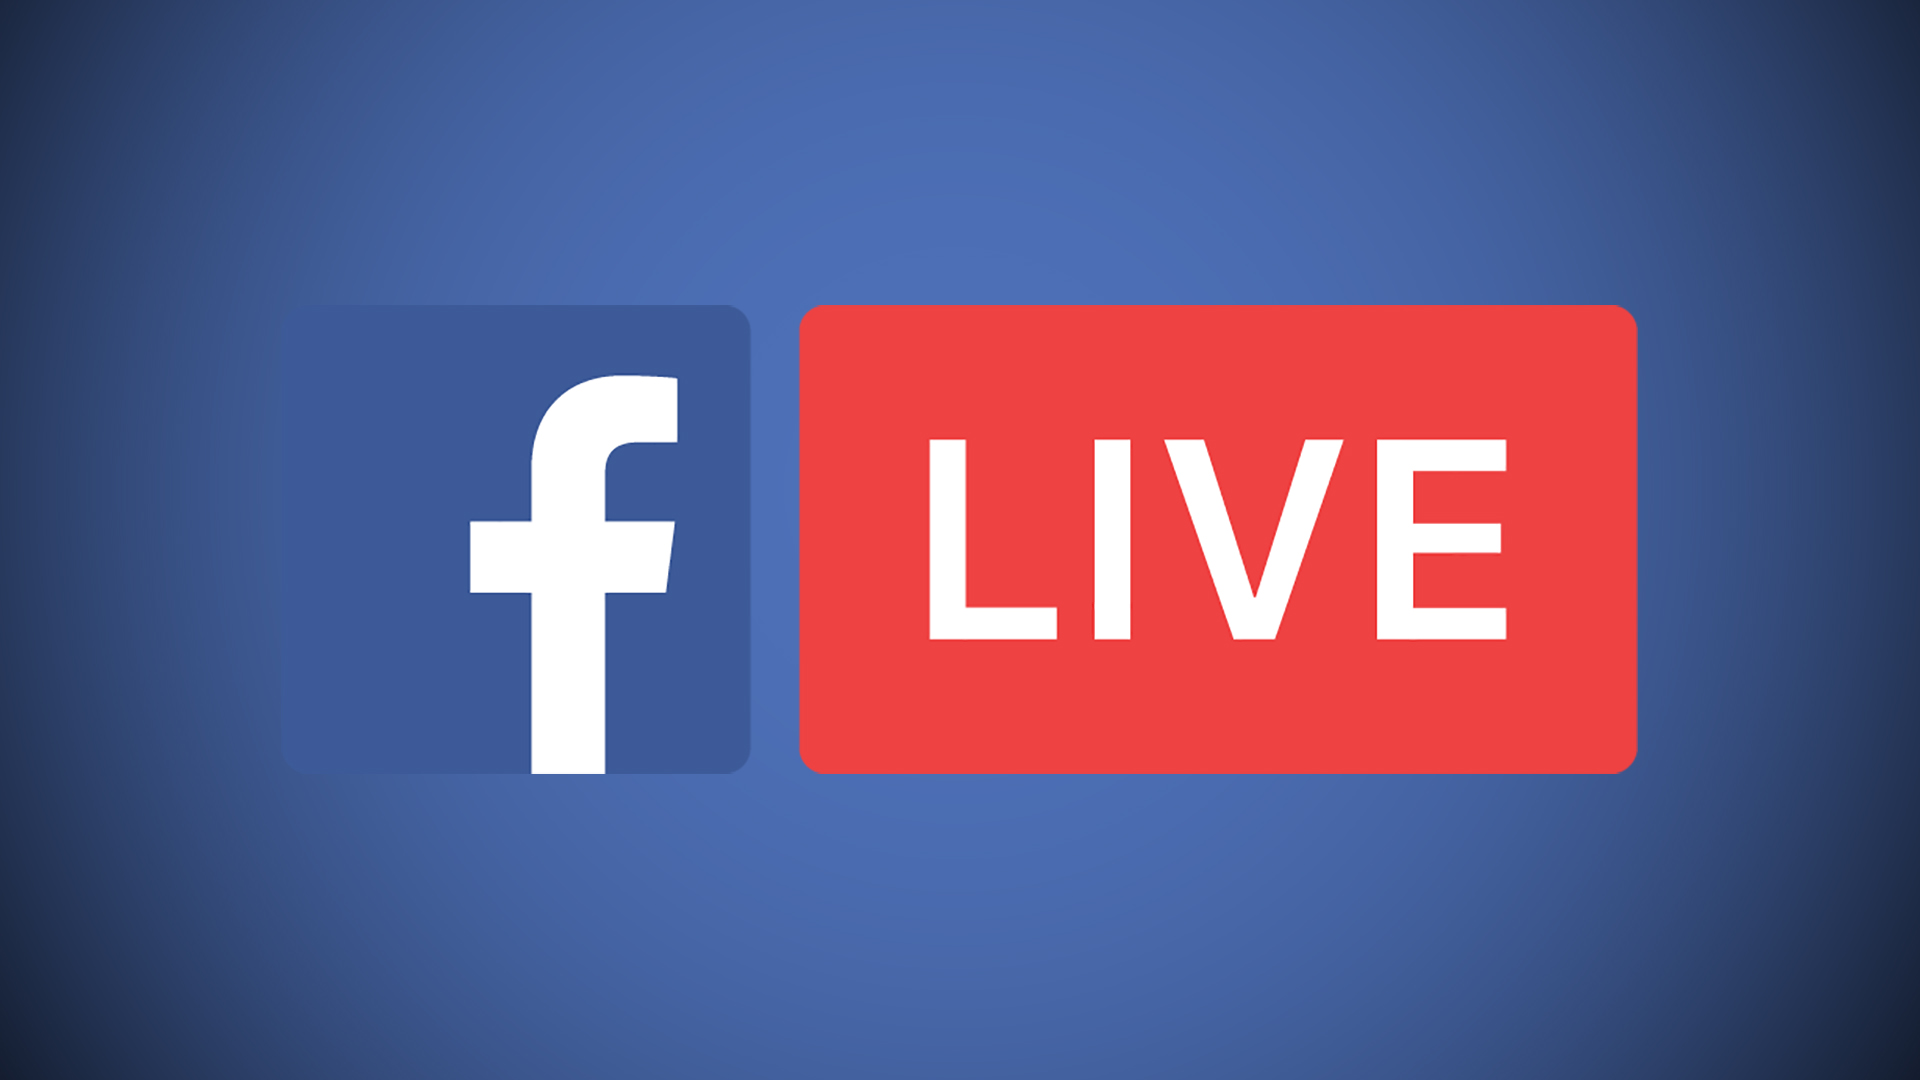 facebook-live-logo2-1920